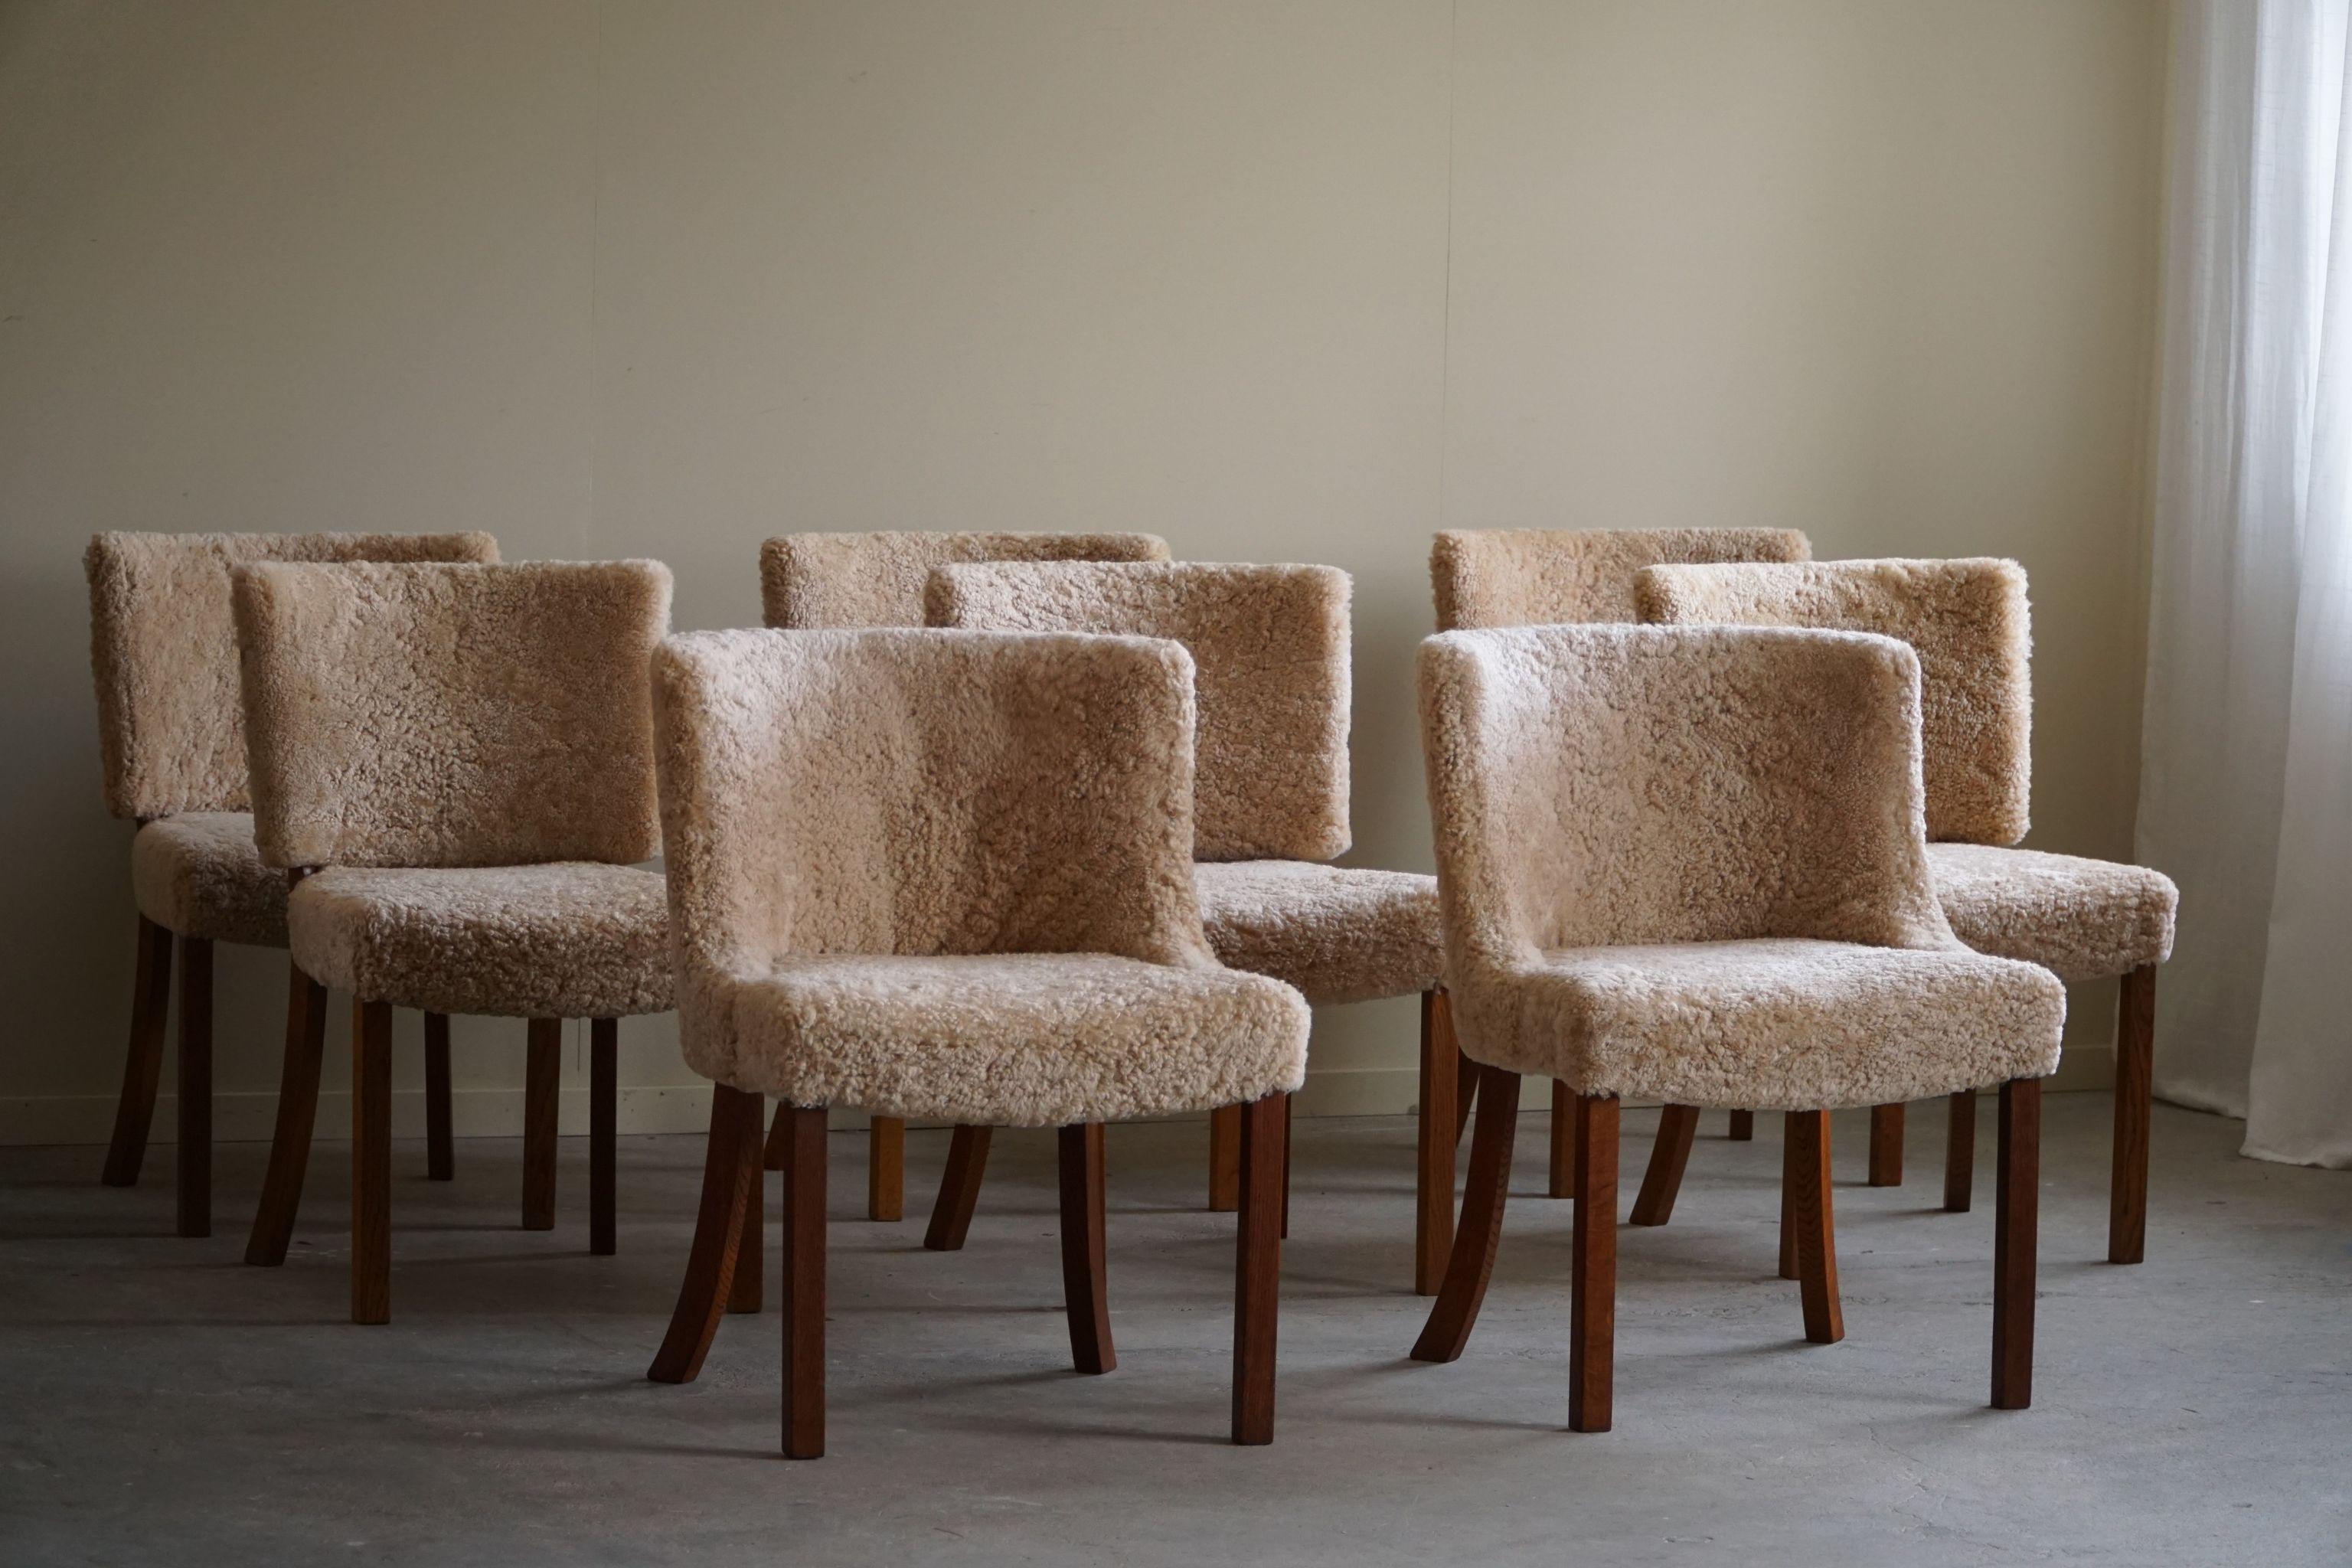 A set of 6 Dining Chairs in Oak and Lambswool, Danish Modern, Kaj Gottlob, 1950s For Sale 13